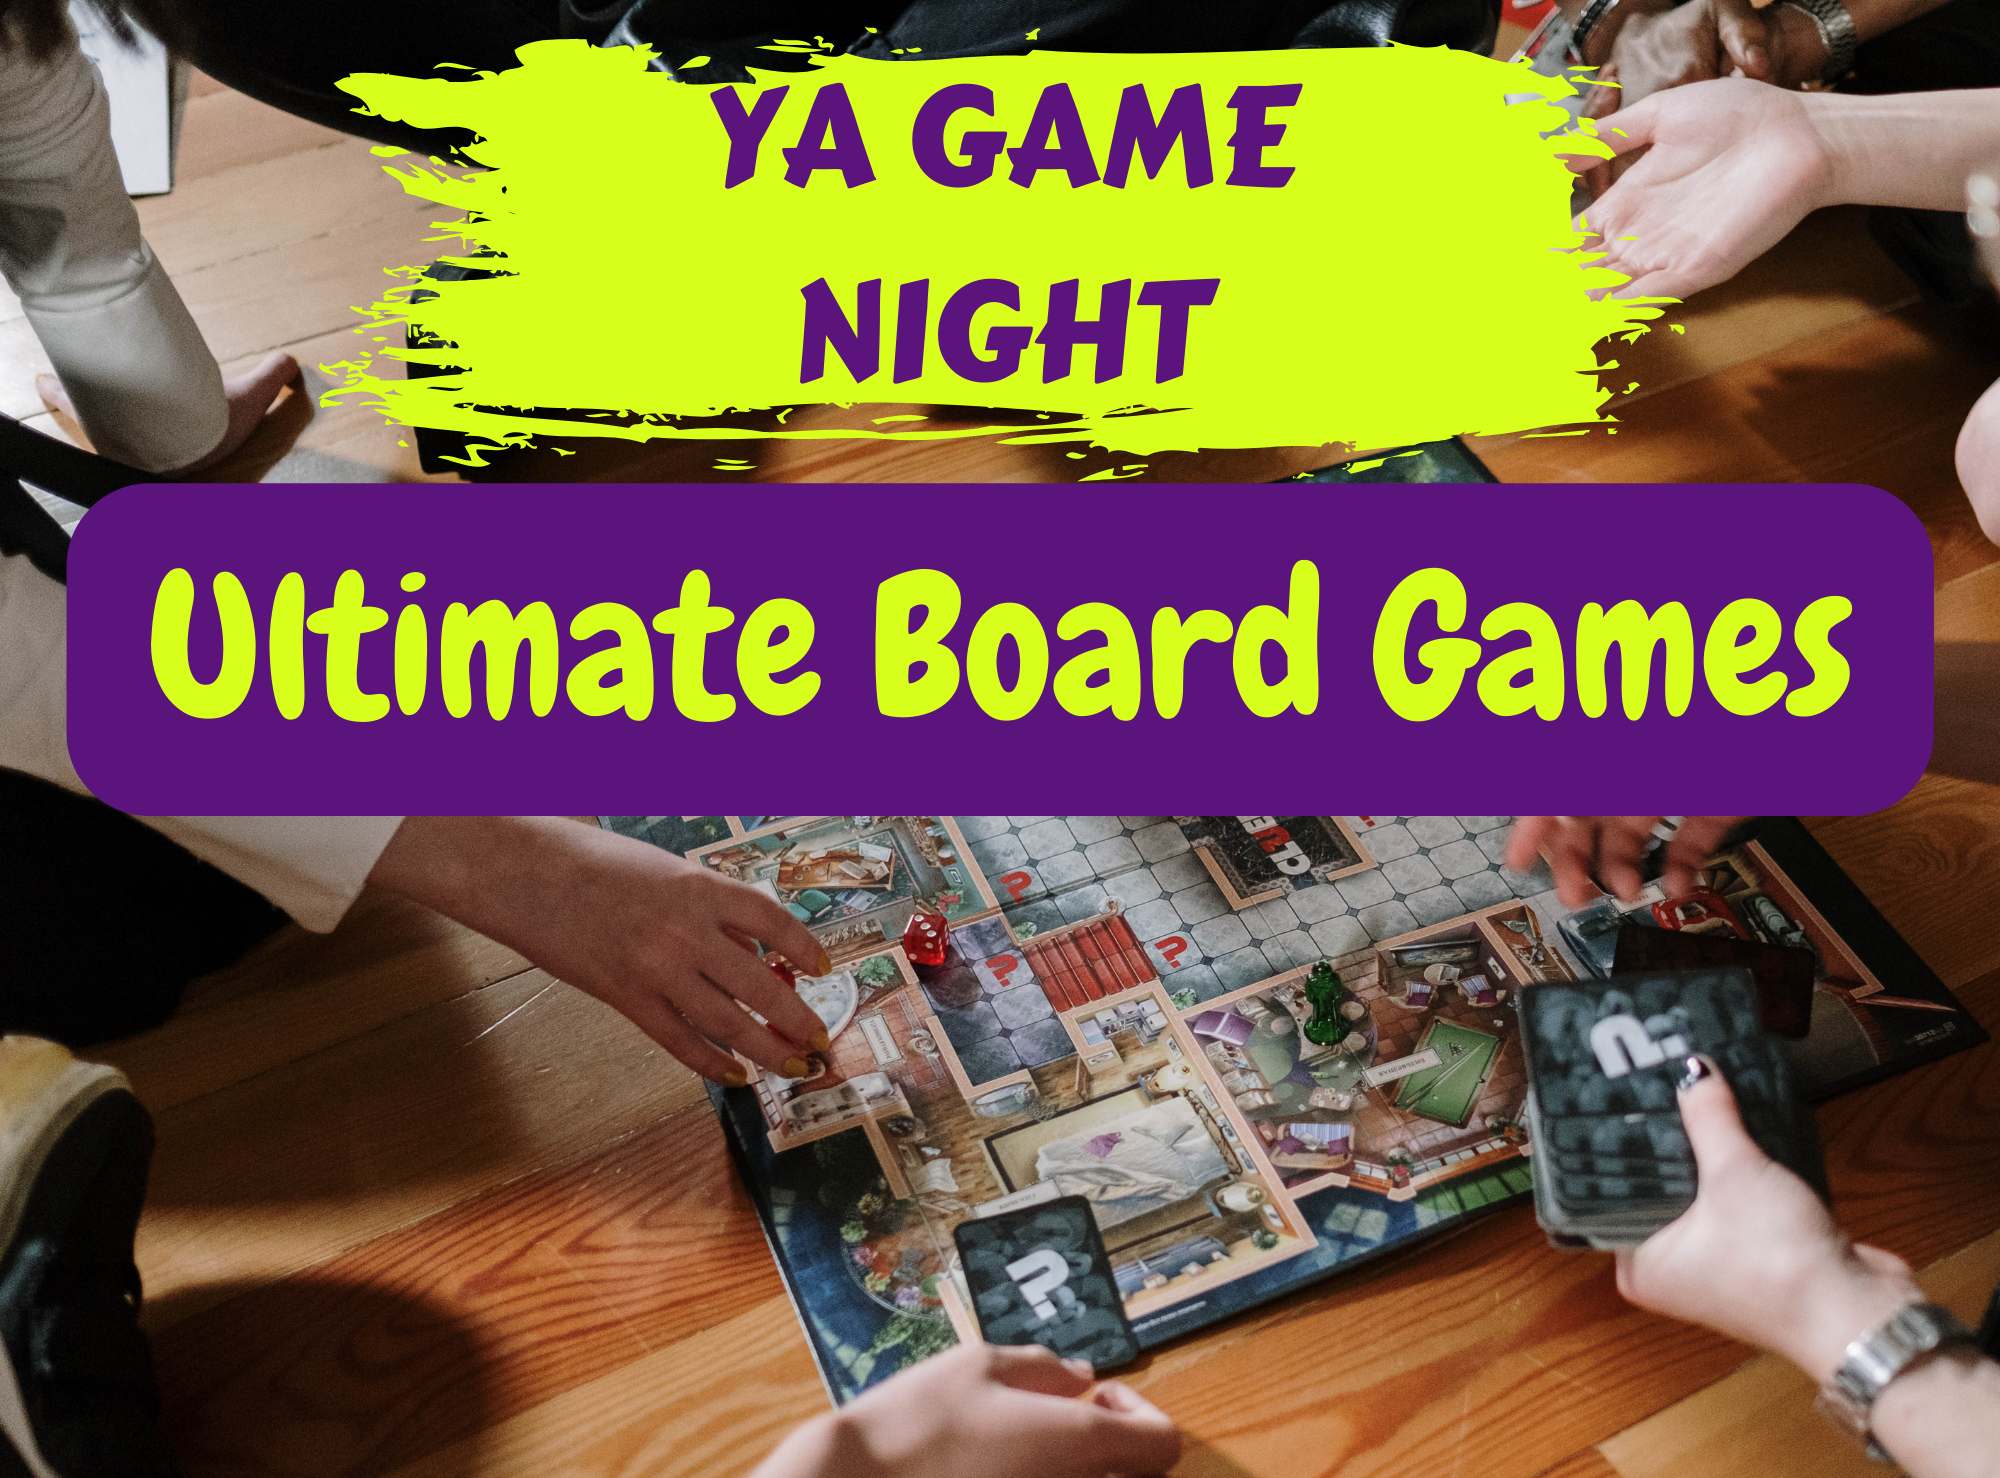 YA Game Night - Ultimate Board Games